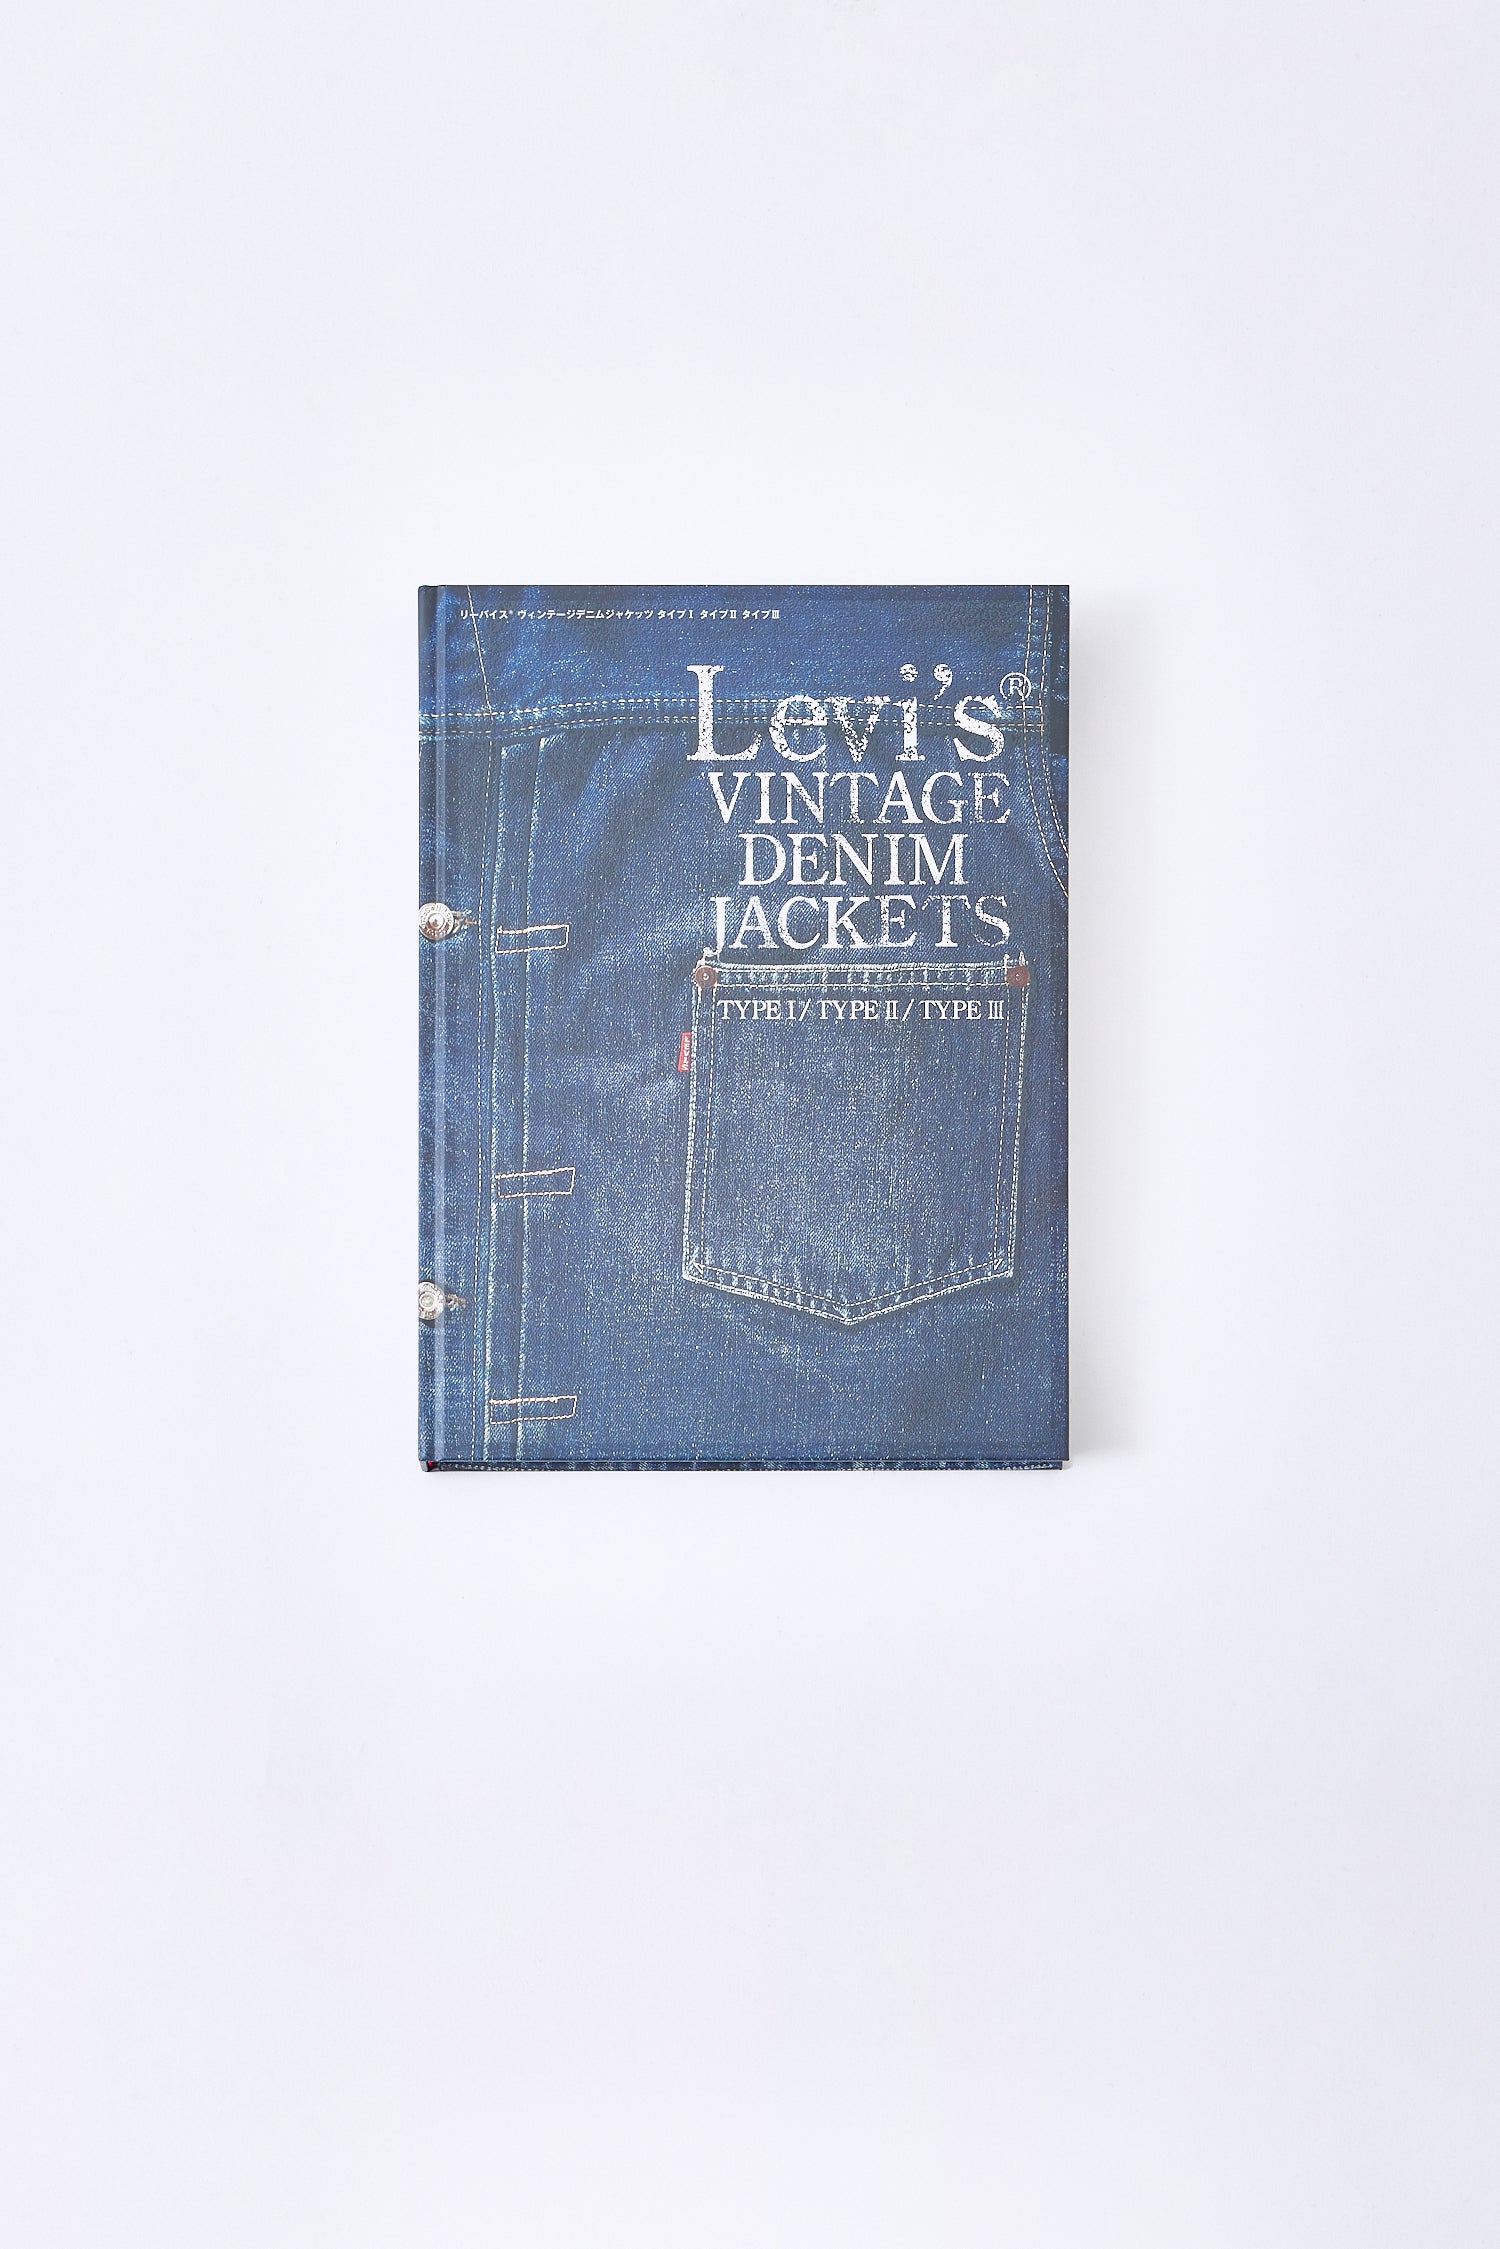 Levi's Vintage Denim Jackets